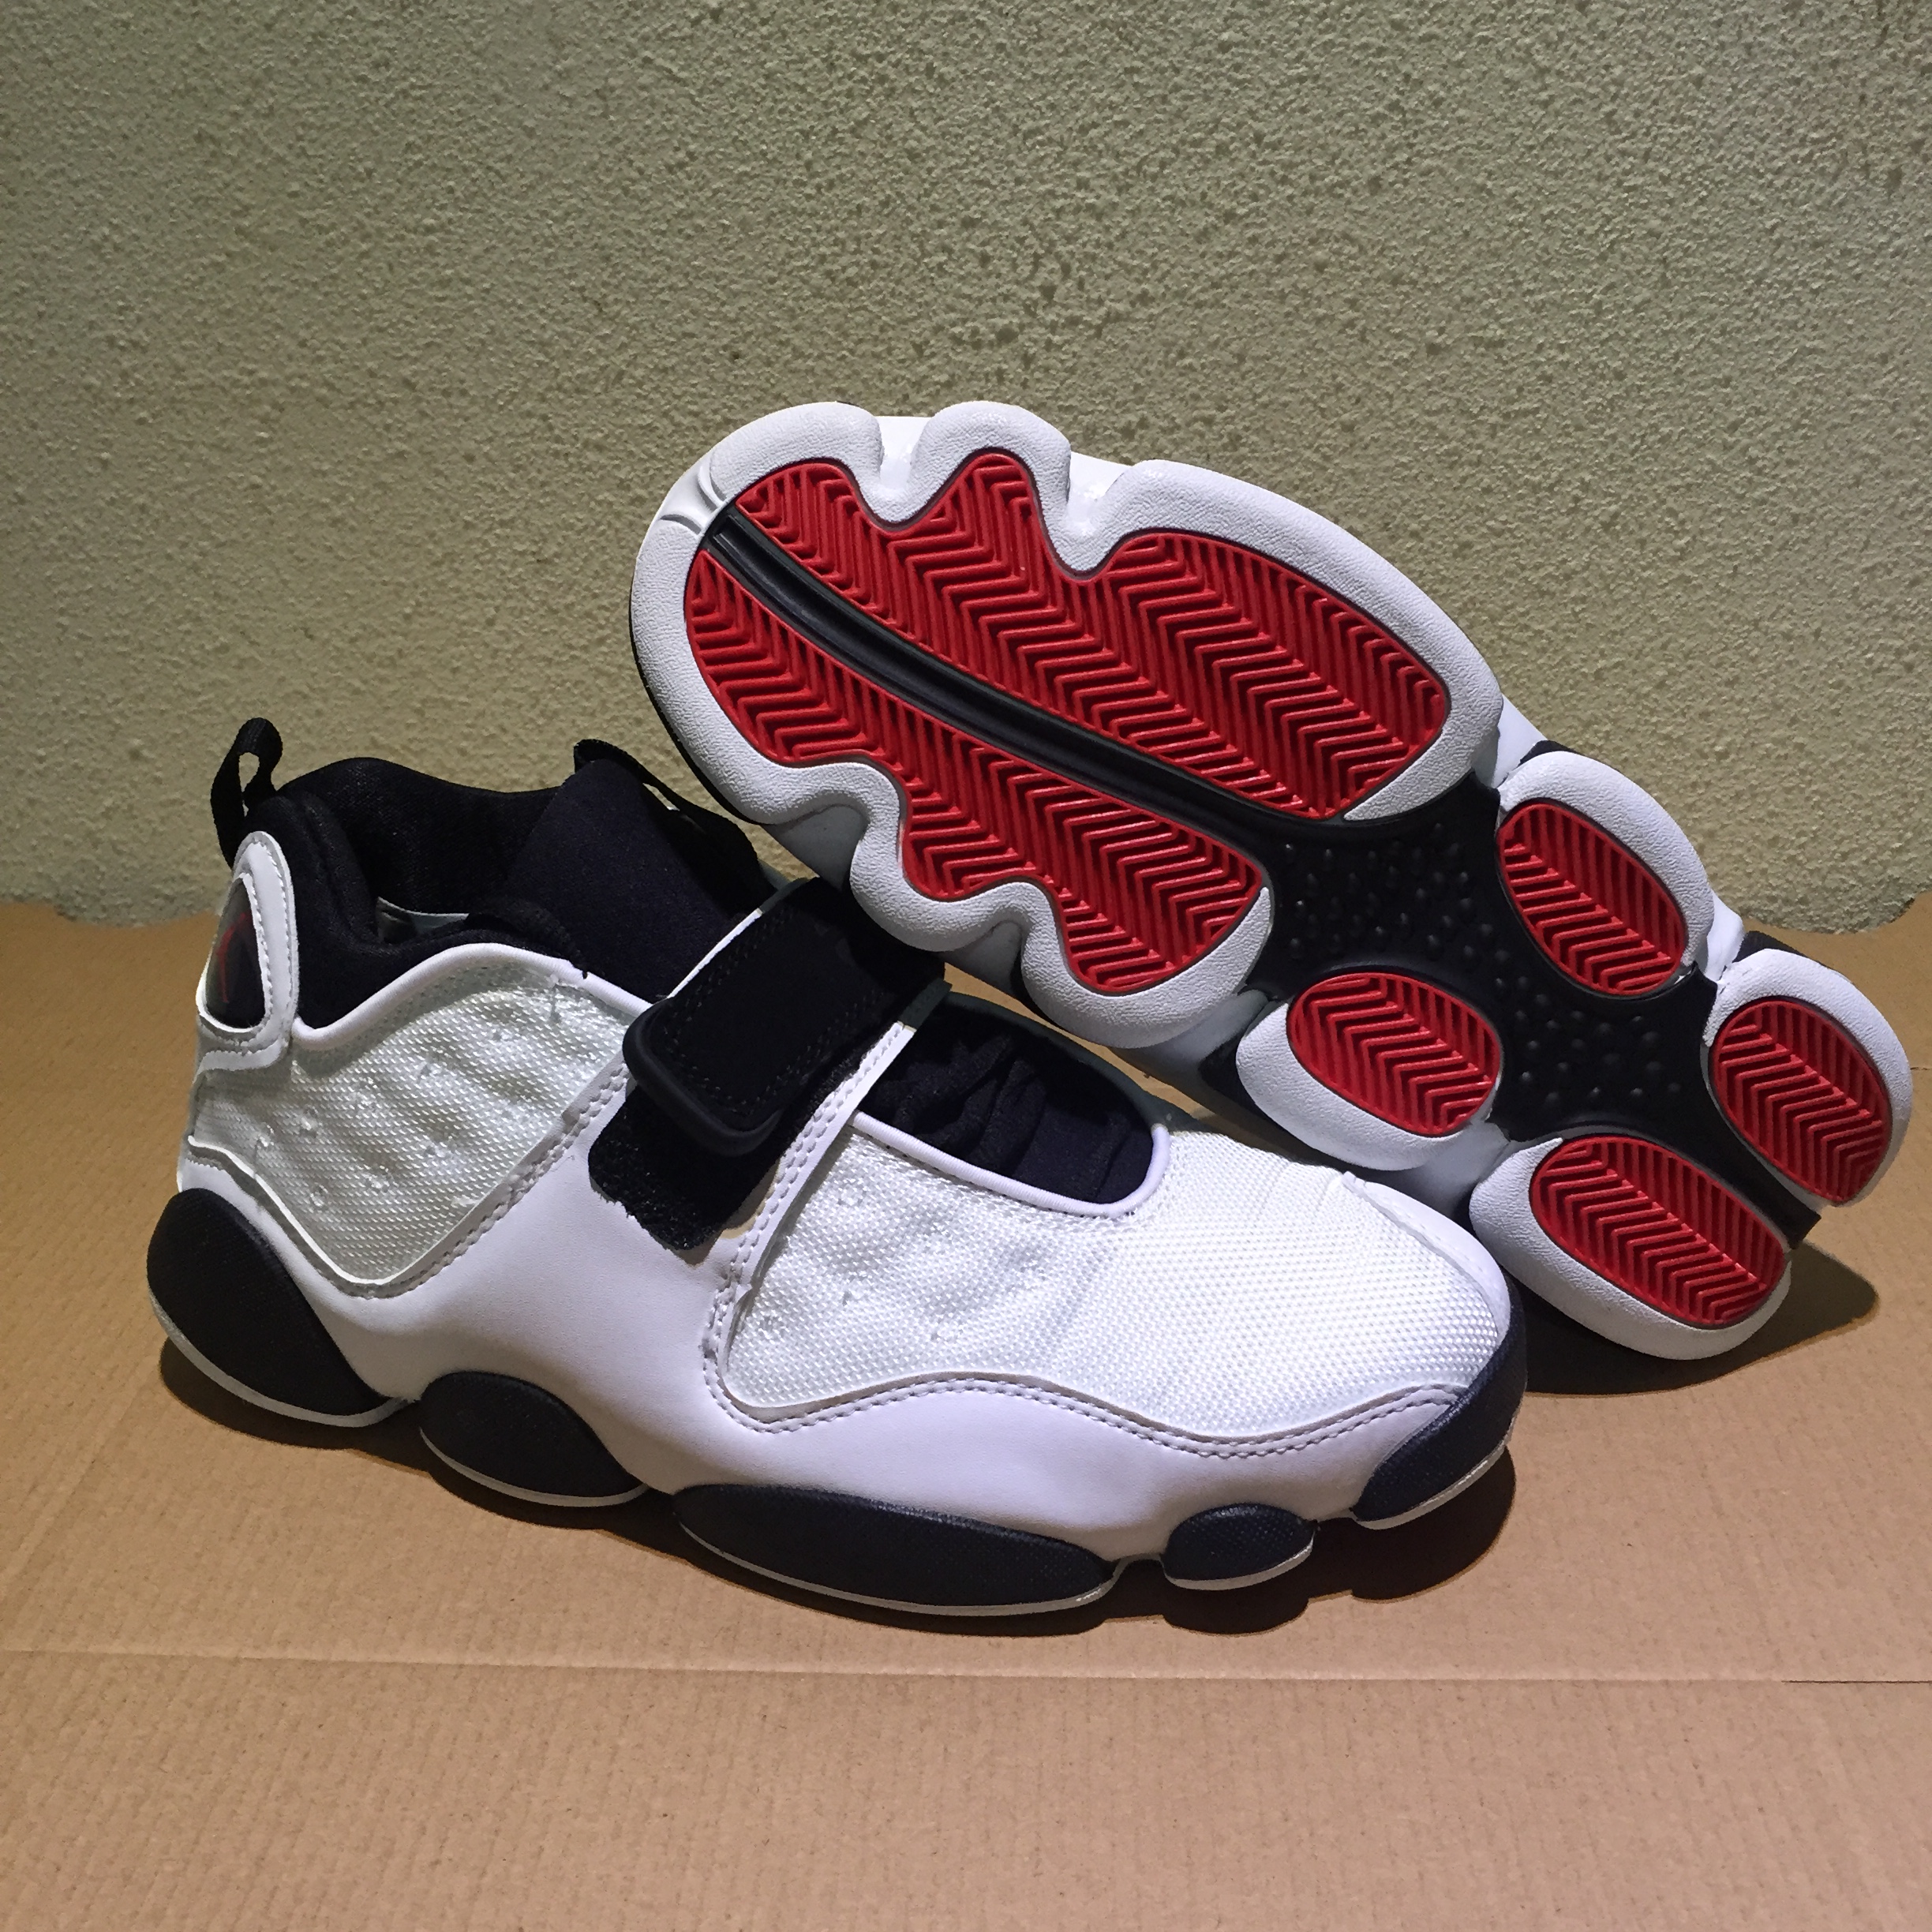 Air Jordan 13 Hand Engage White Black Red Shoes